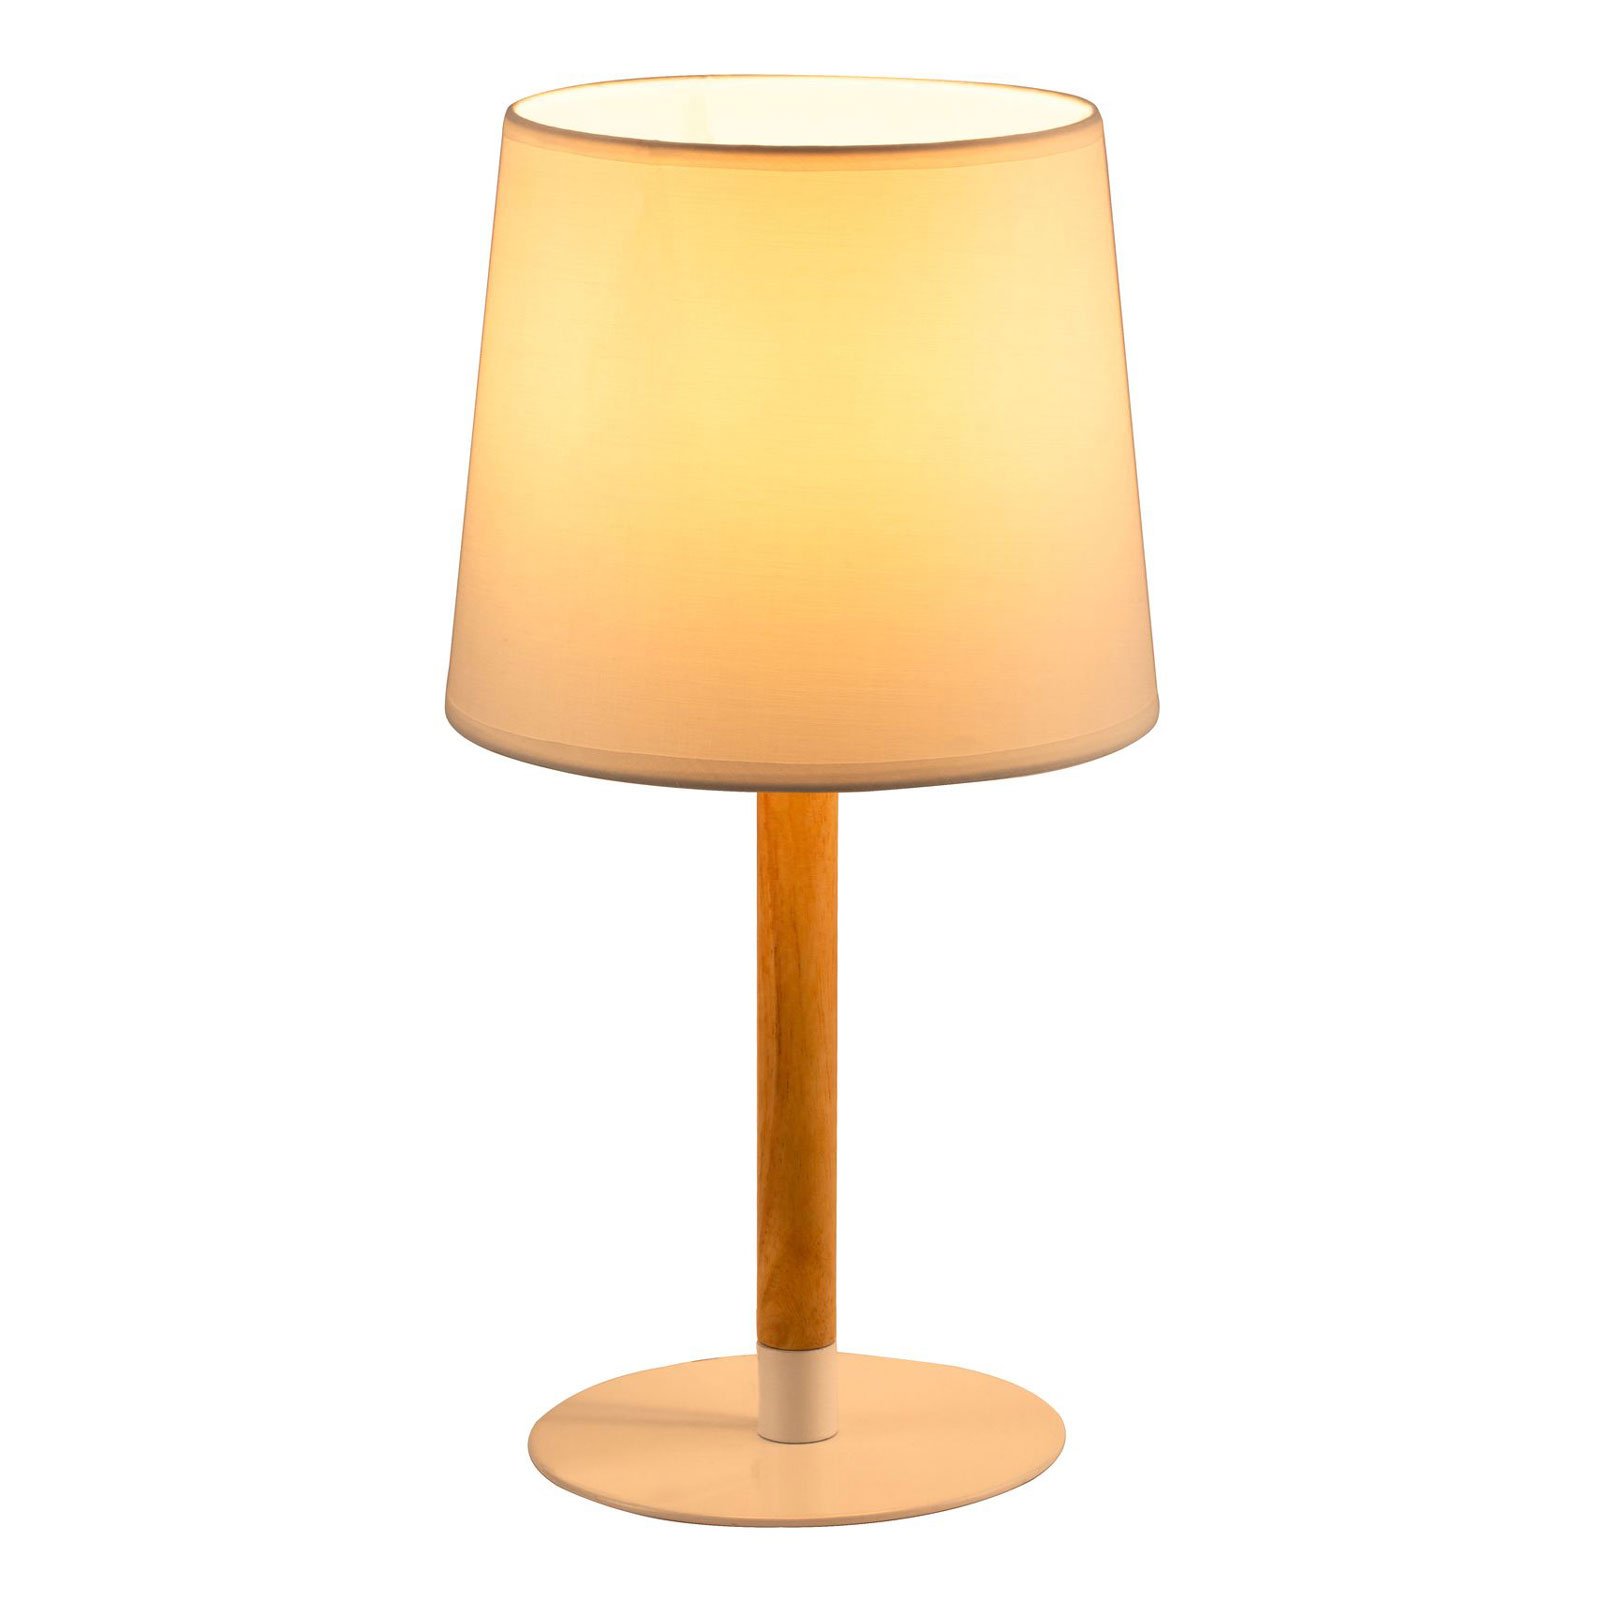 Pauleen Woody Cuddles bordlampe med stofskærm